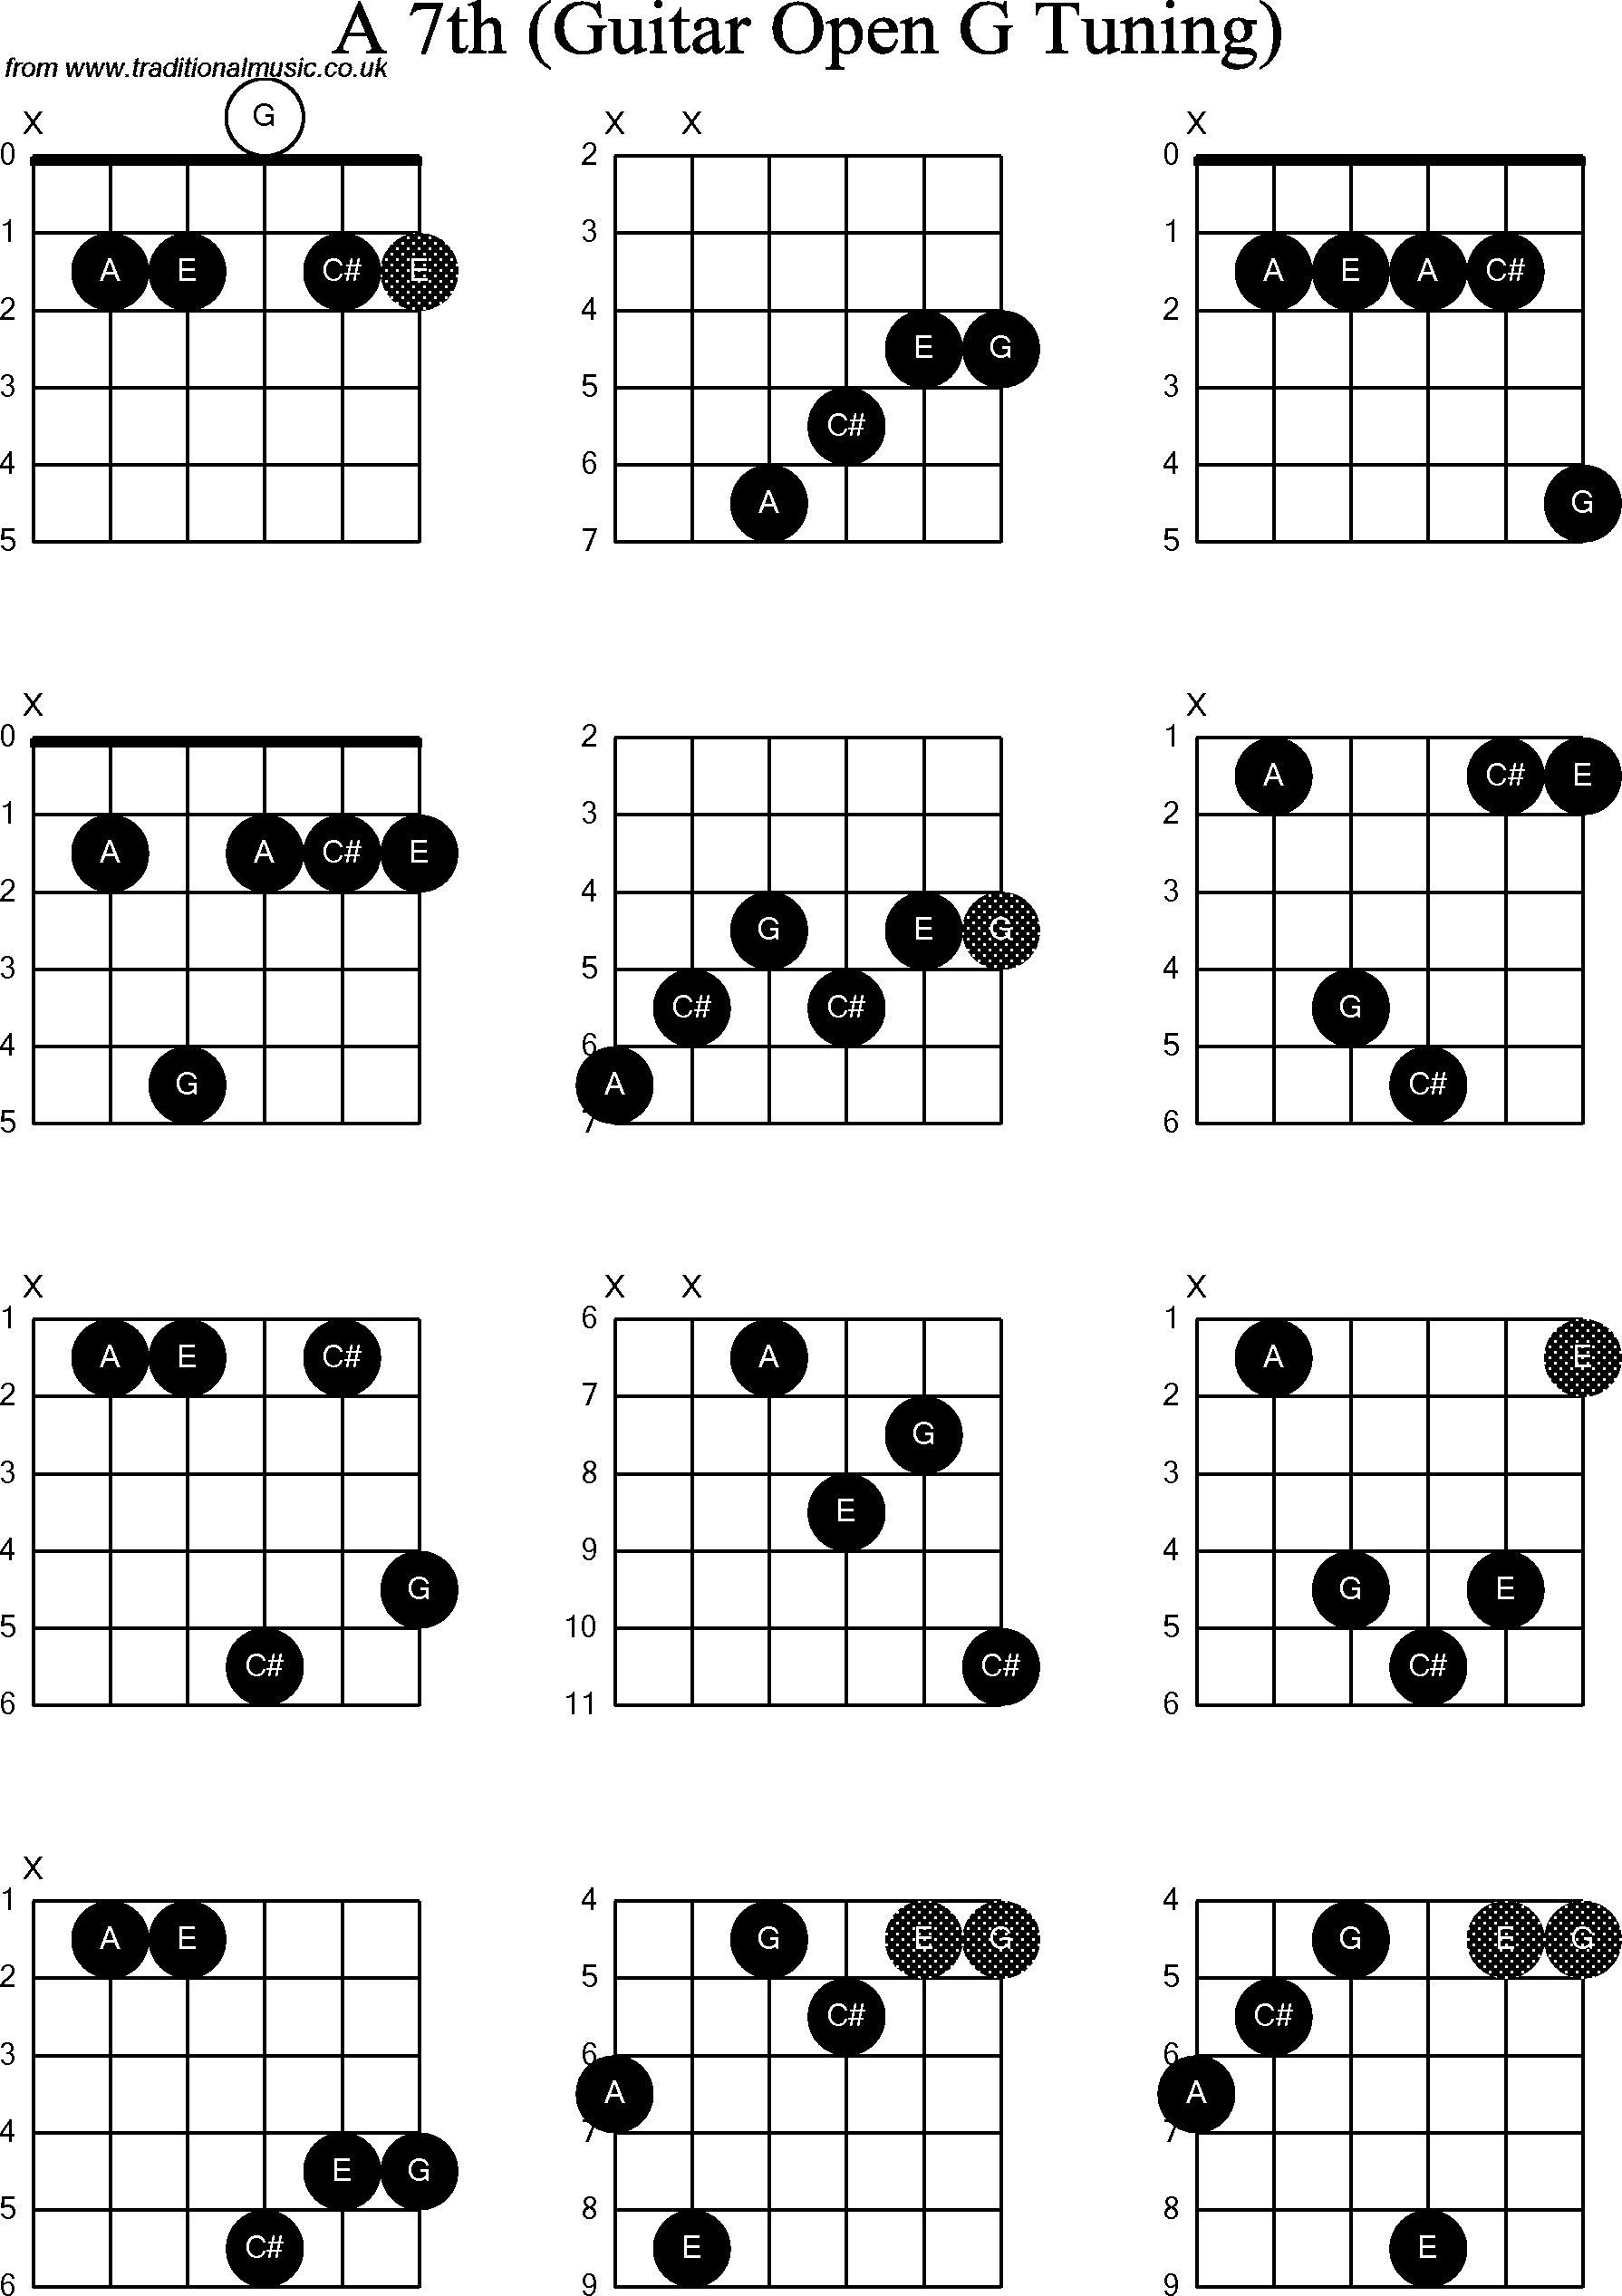 Chord diagrams for: Dobro A7th